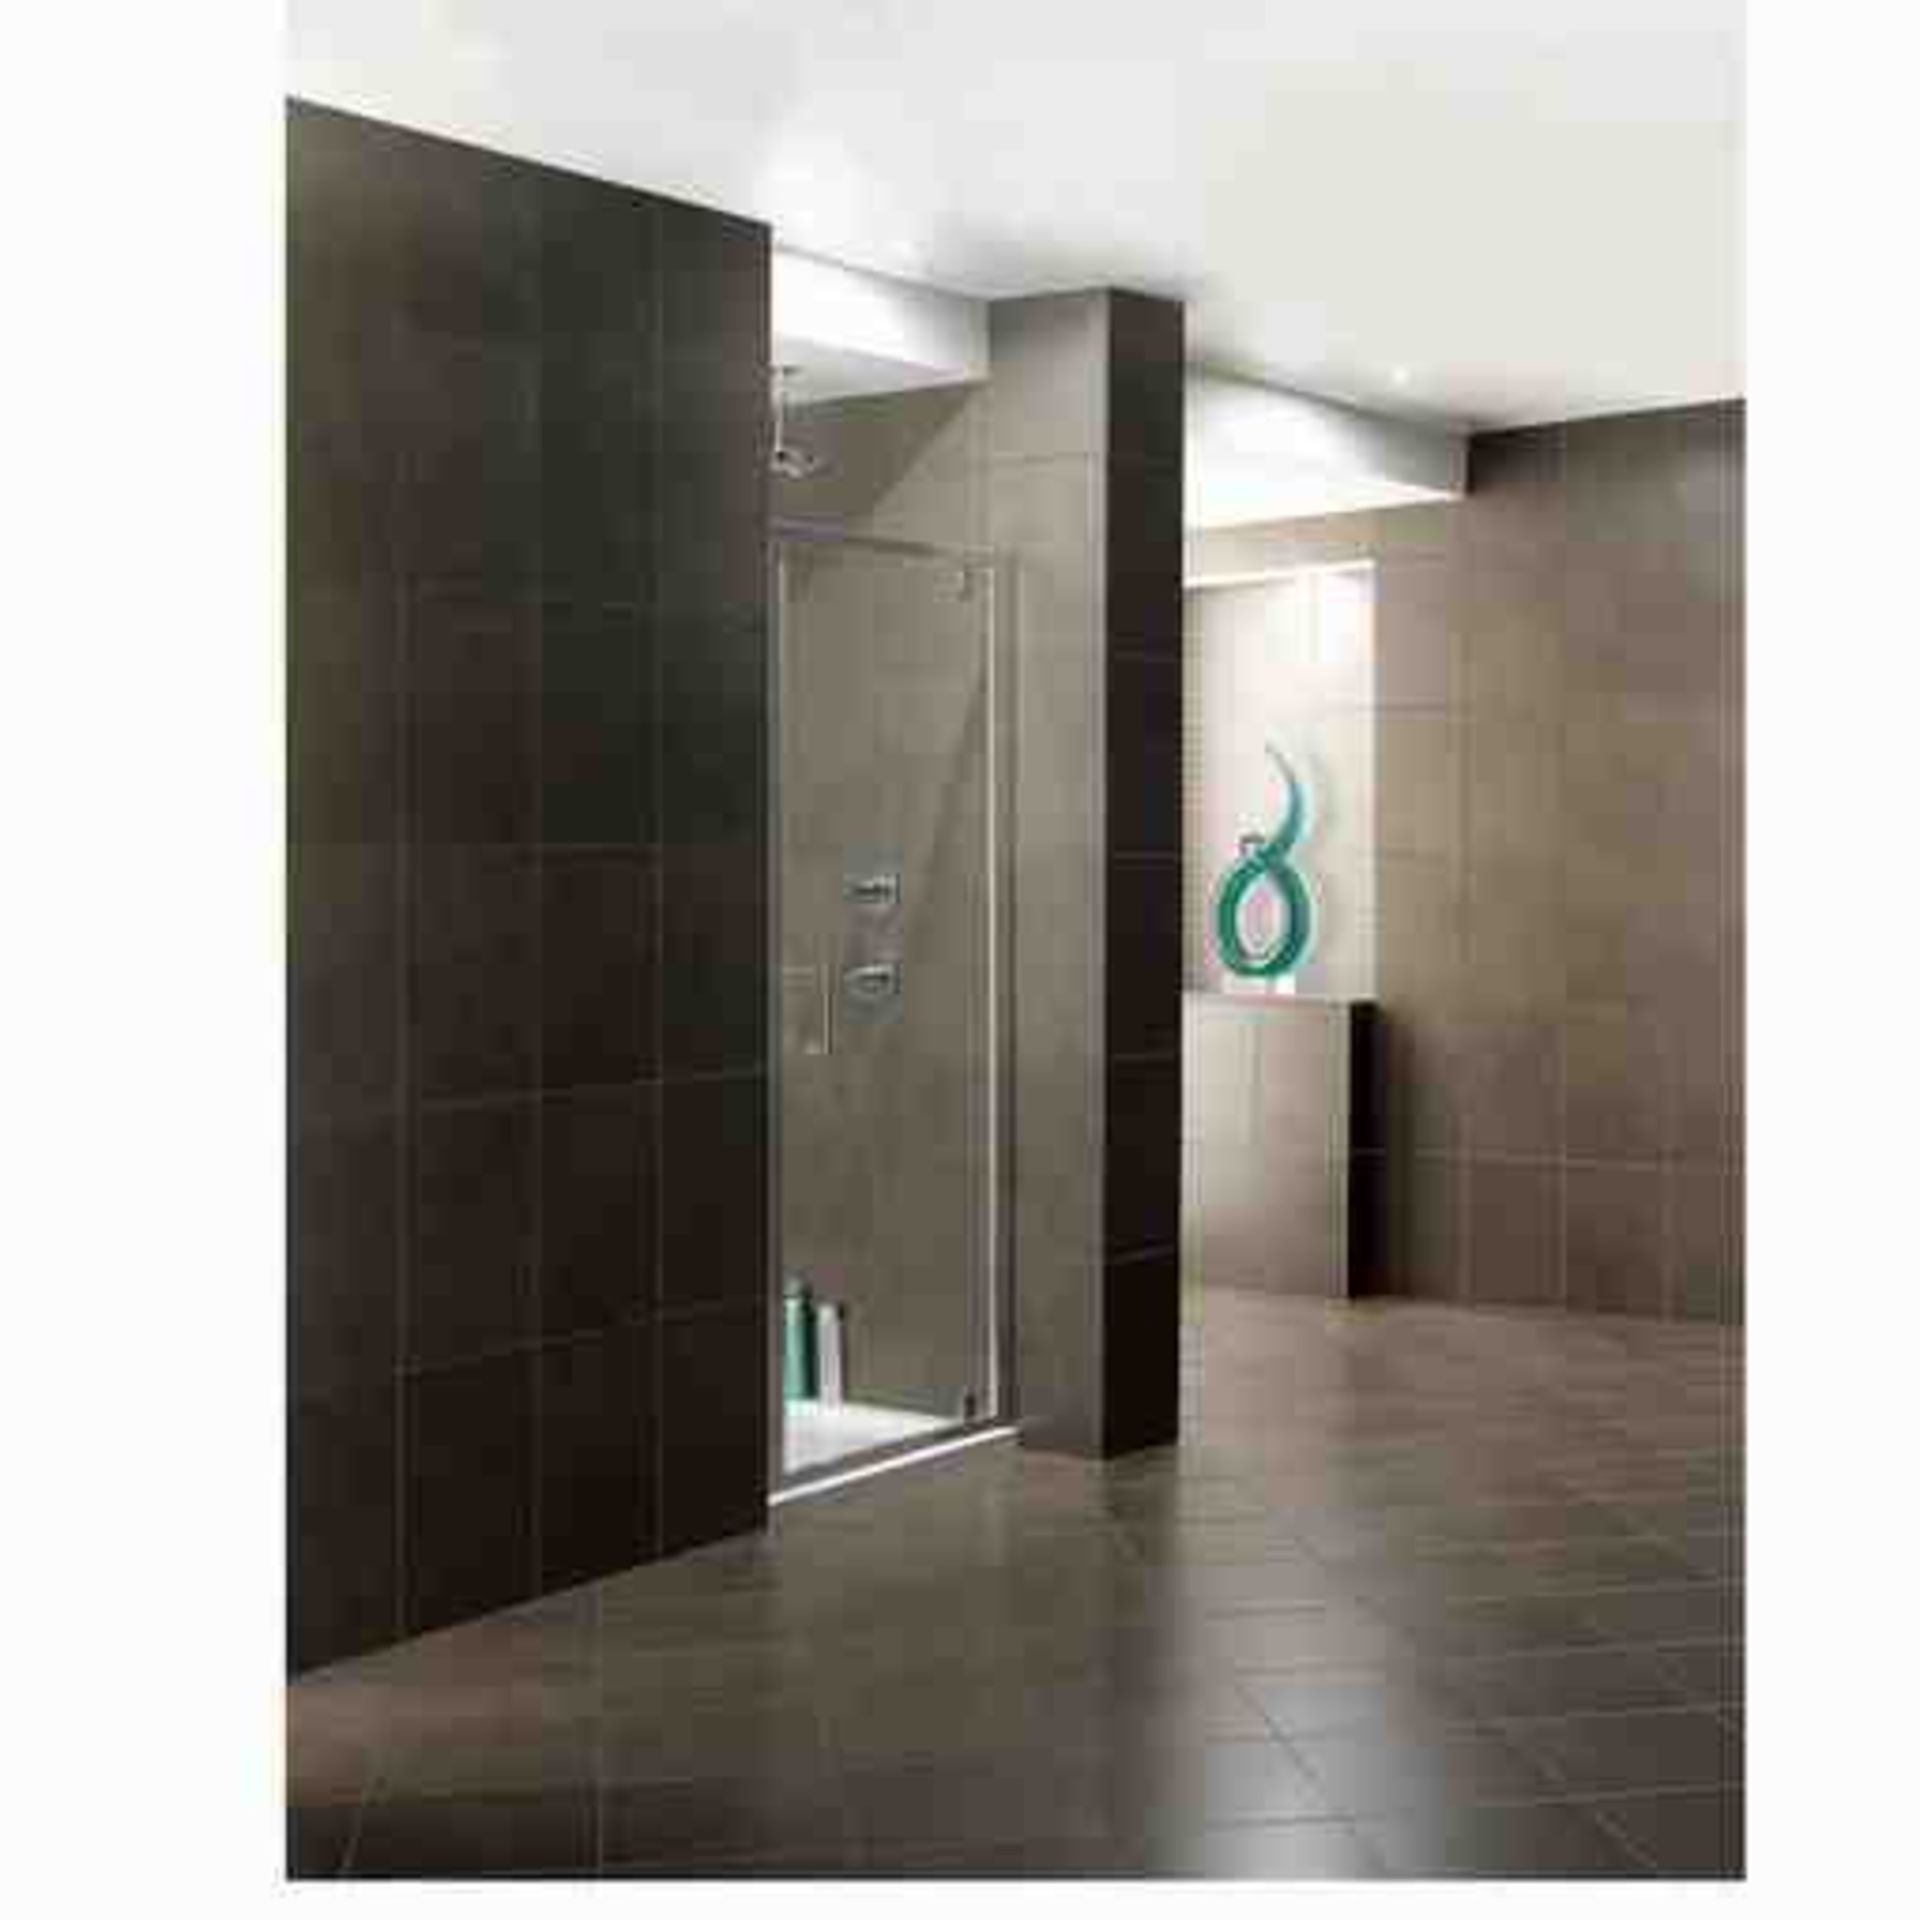 1 x Vogue SULIS 800mm Shower Enclosure - Includes Pivot Shower Door and Side Panel - Polished Chrome